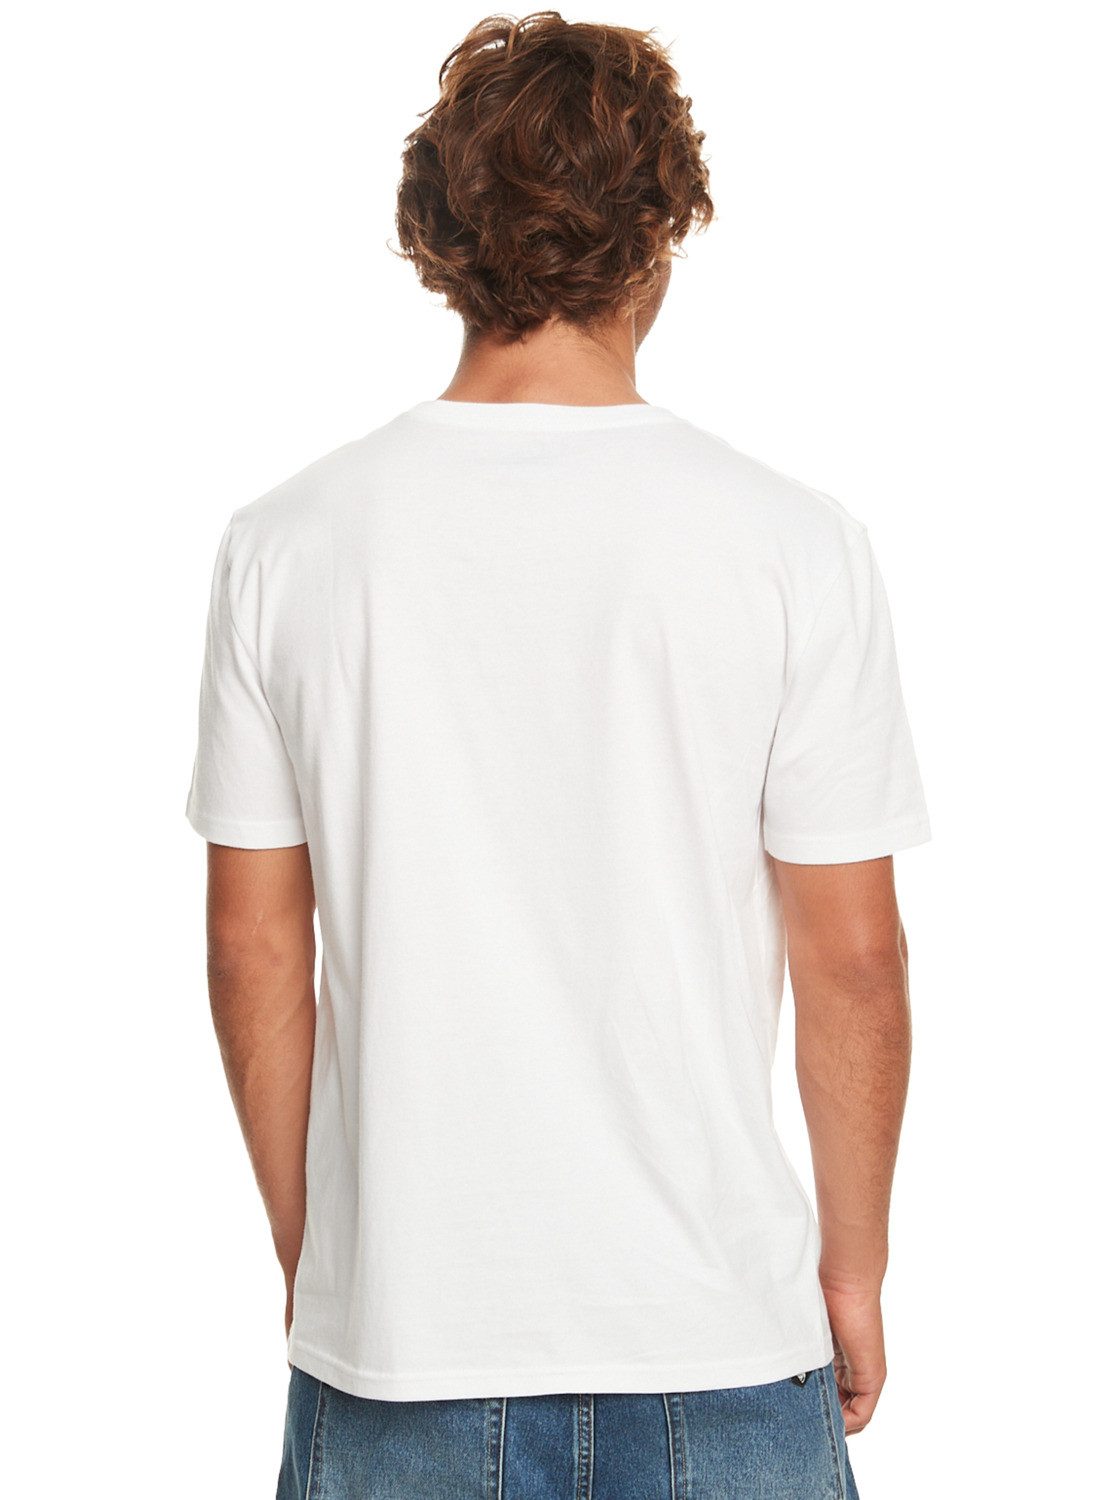 Circle T-Shirt White Trim Quiksilver